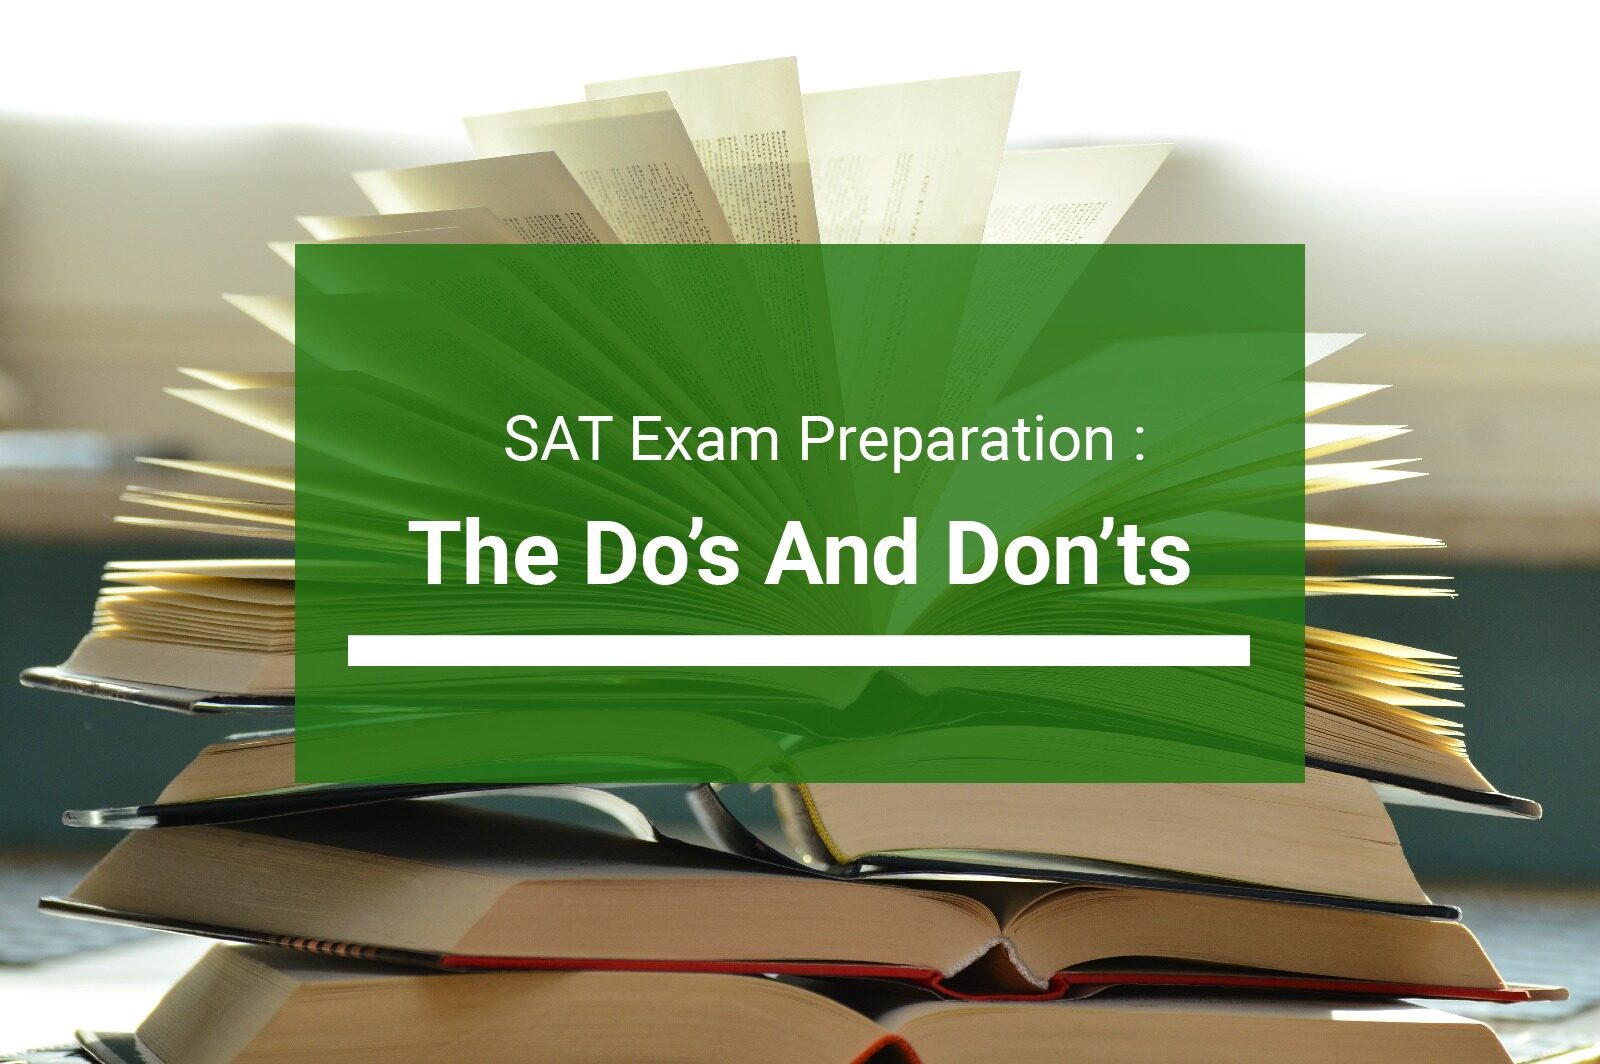 Time Management Tips for Effective Online SAT Exam Preparation